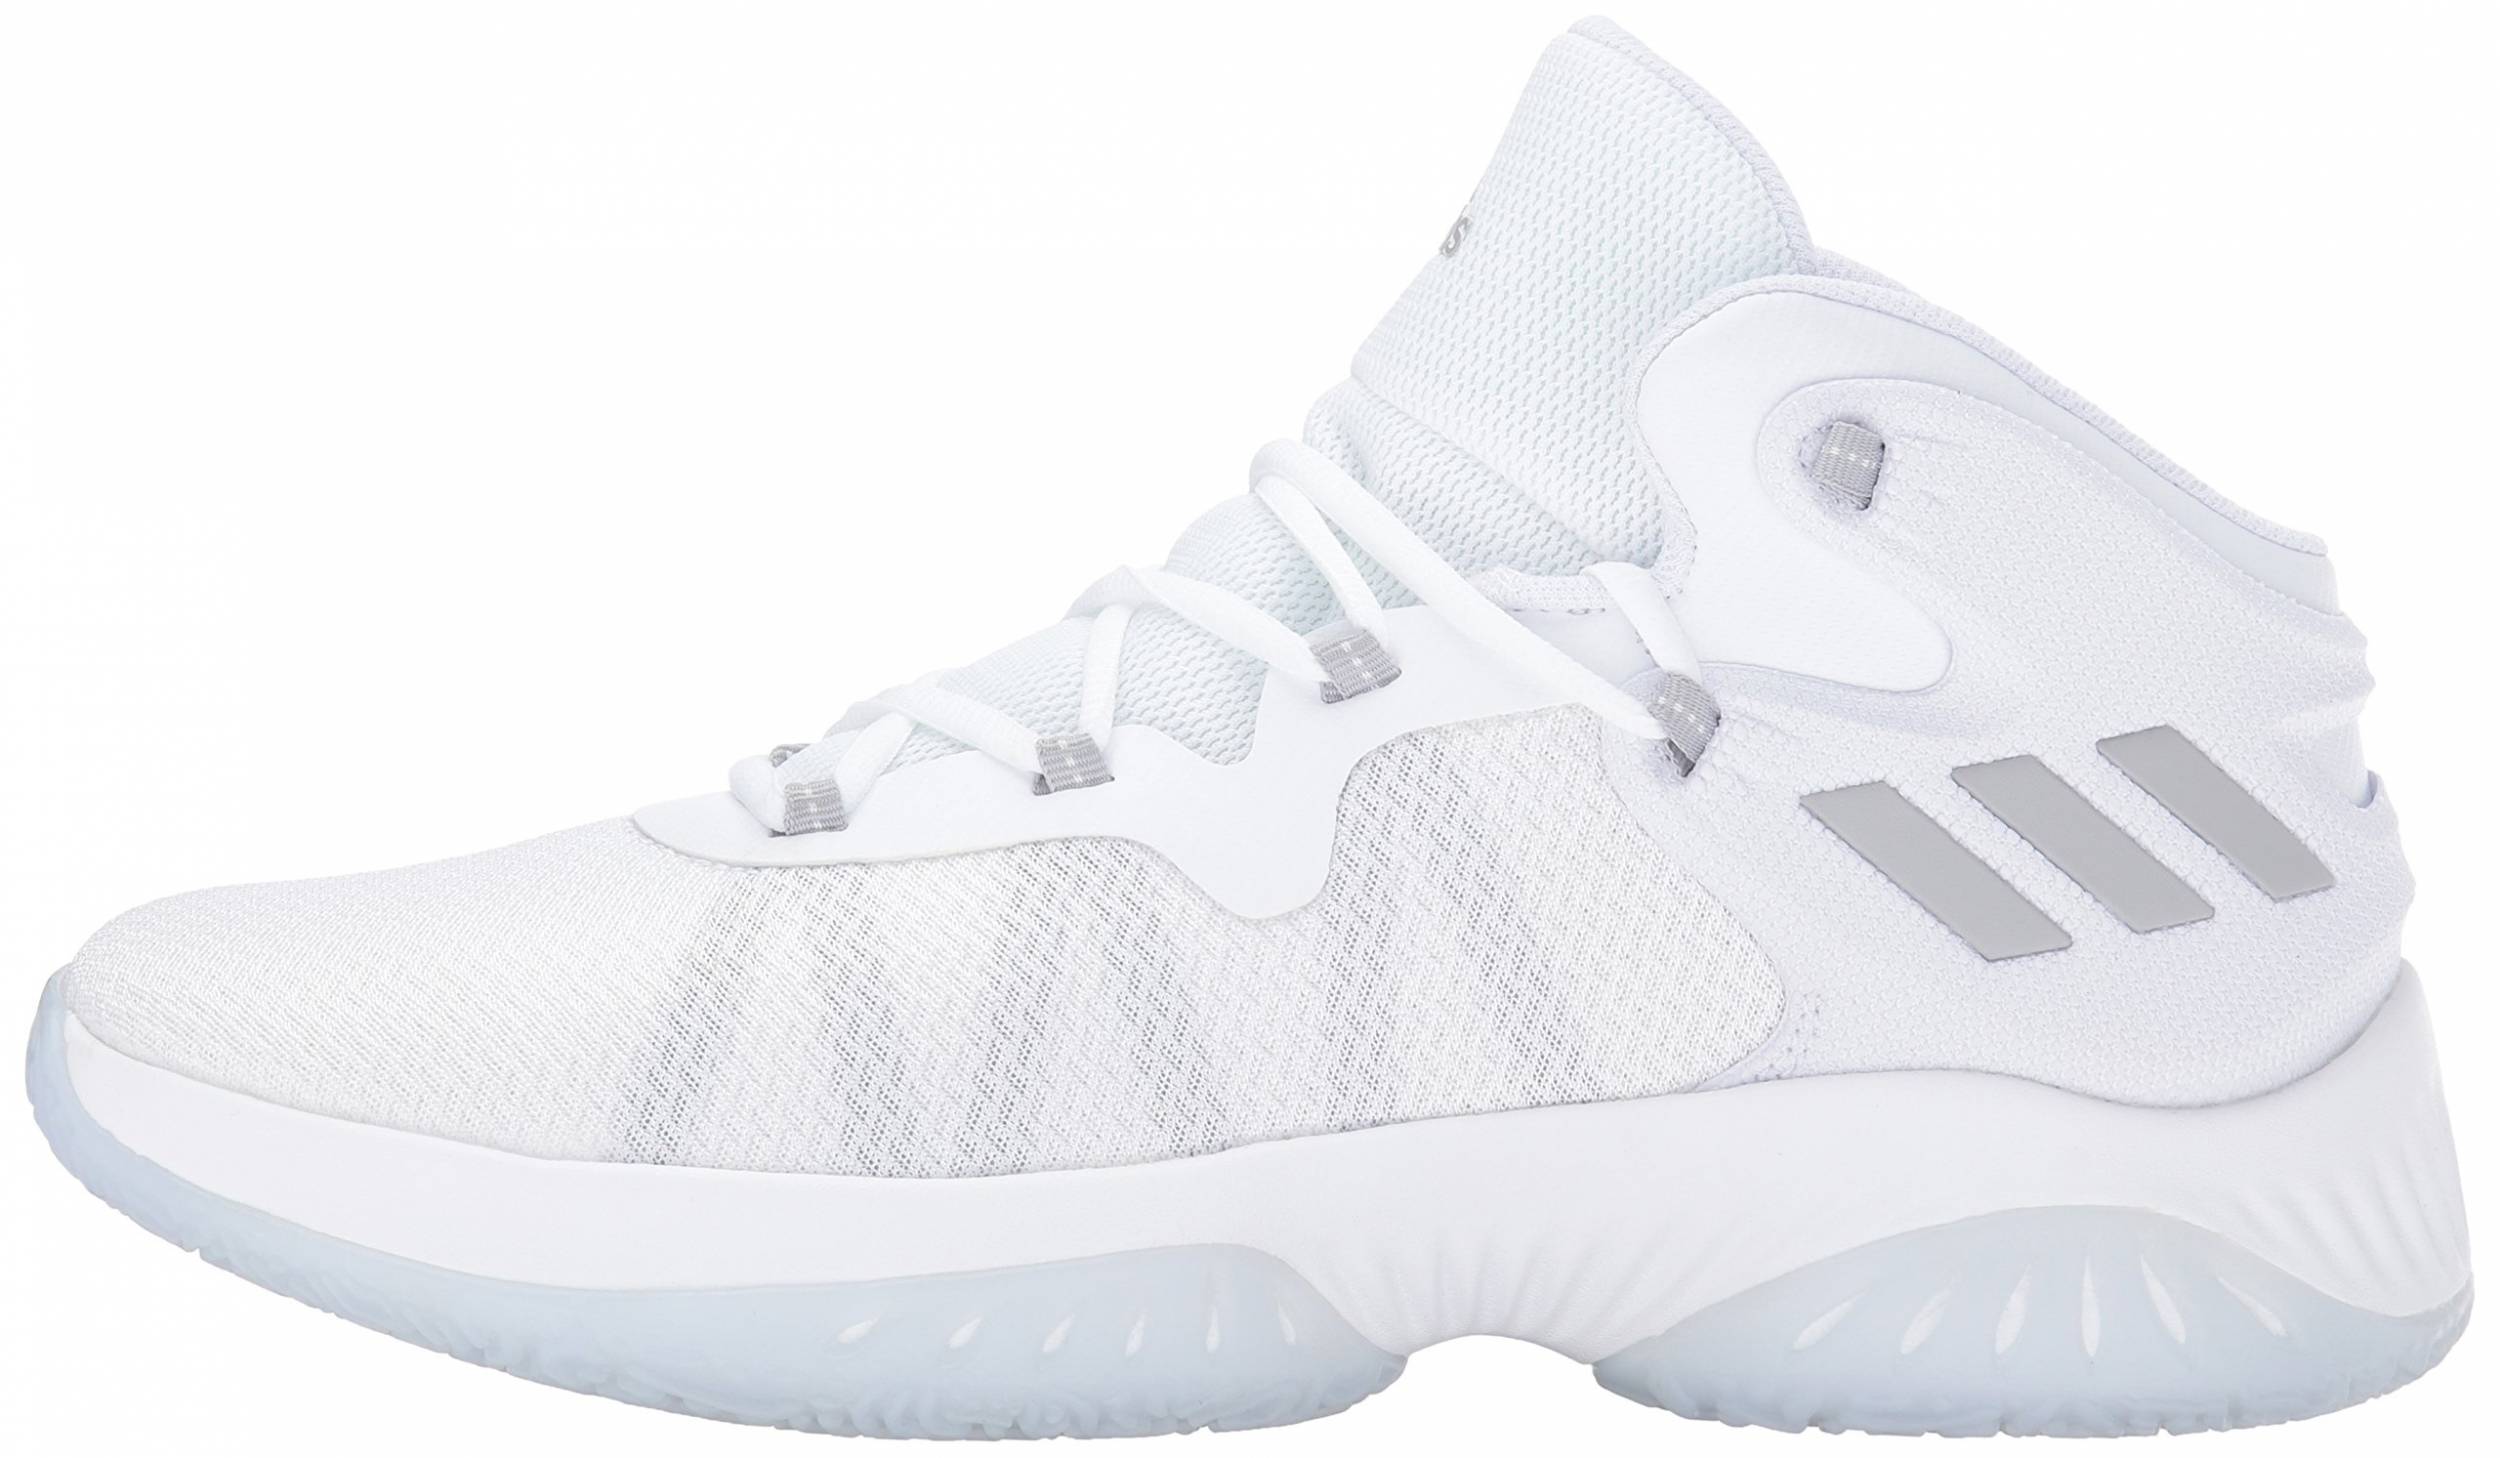 White Adidas Basketball Shoes 